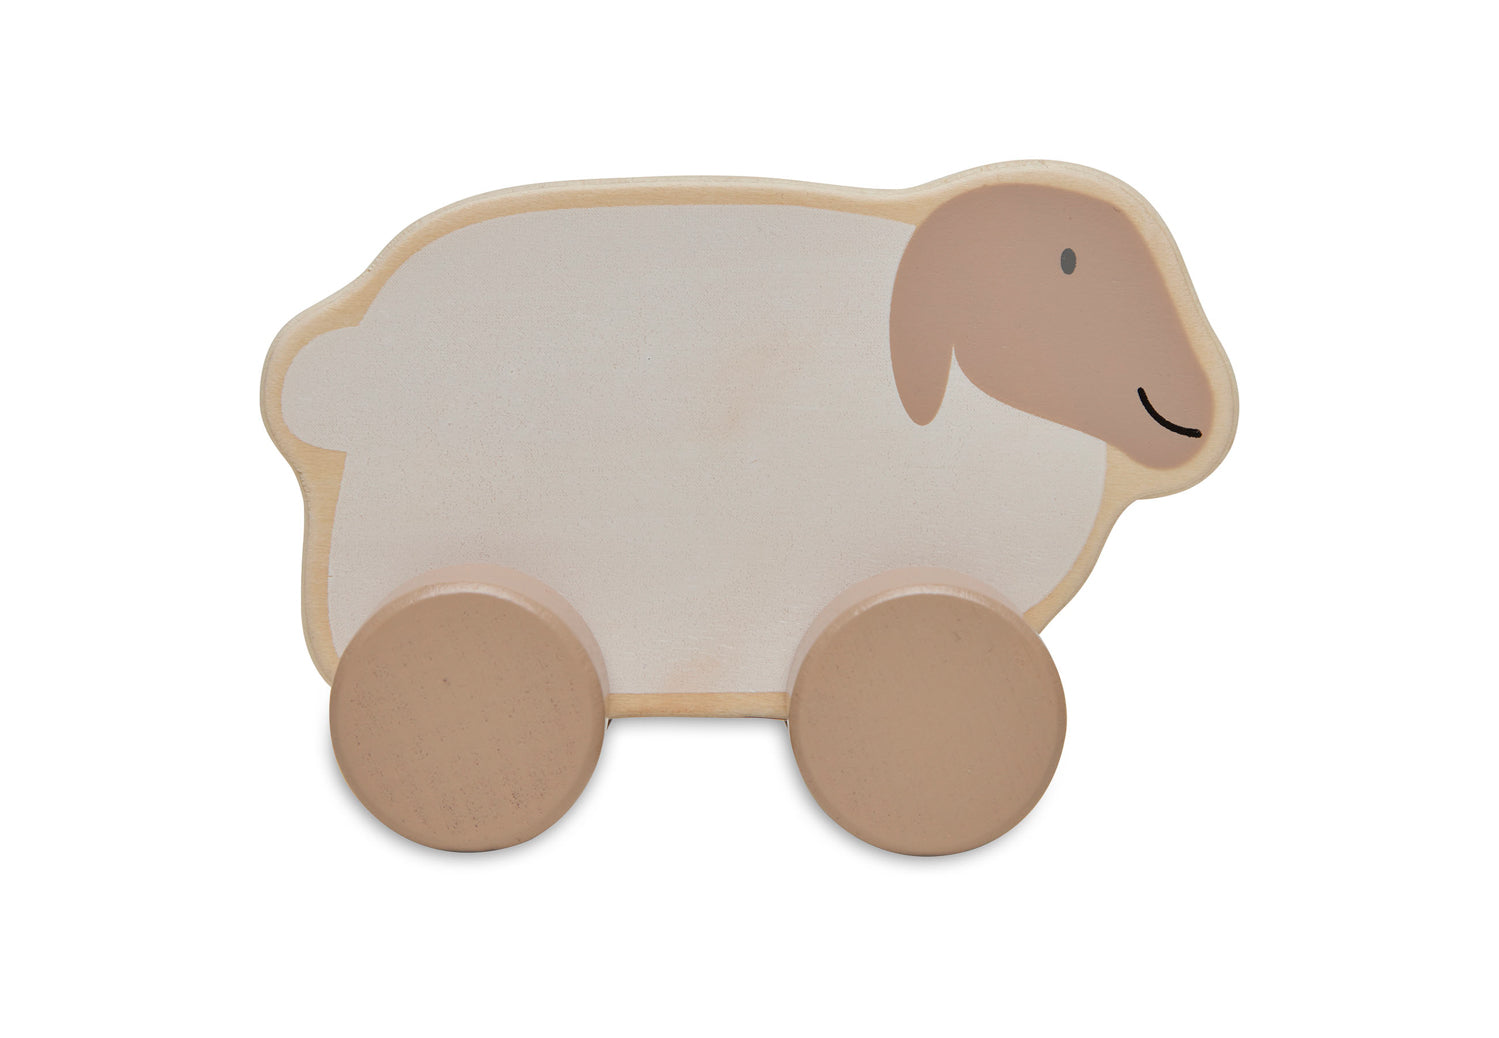 Jollein wooden toy car lamb